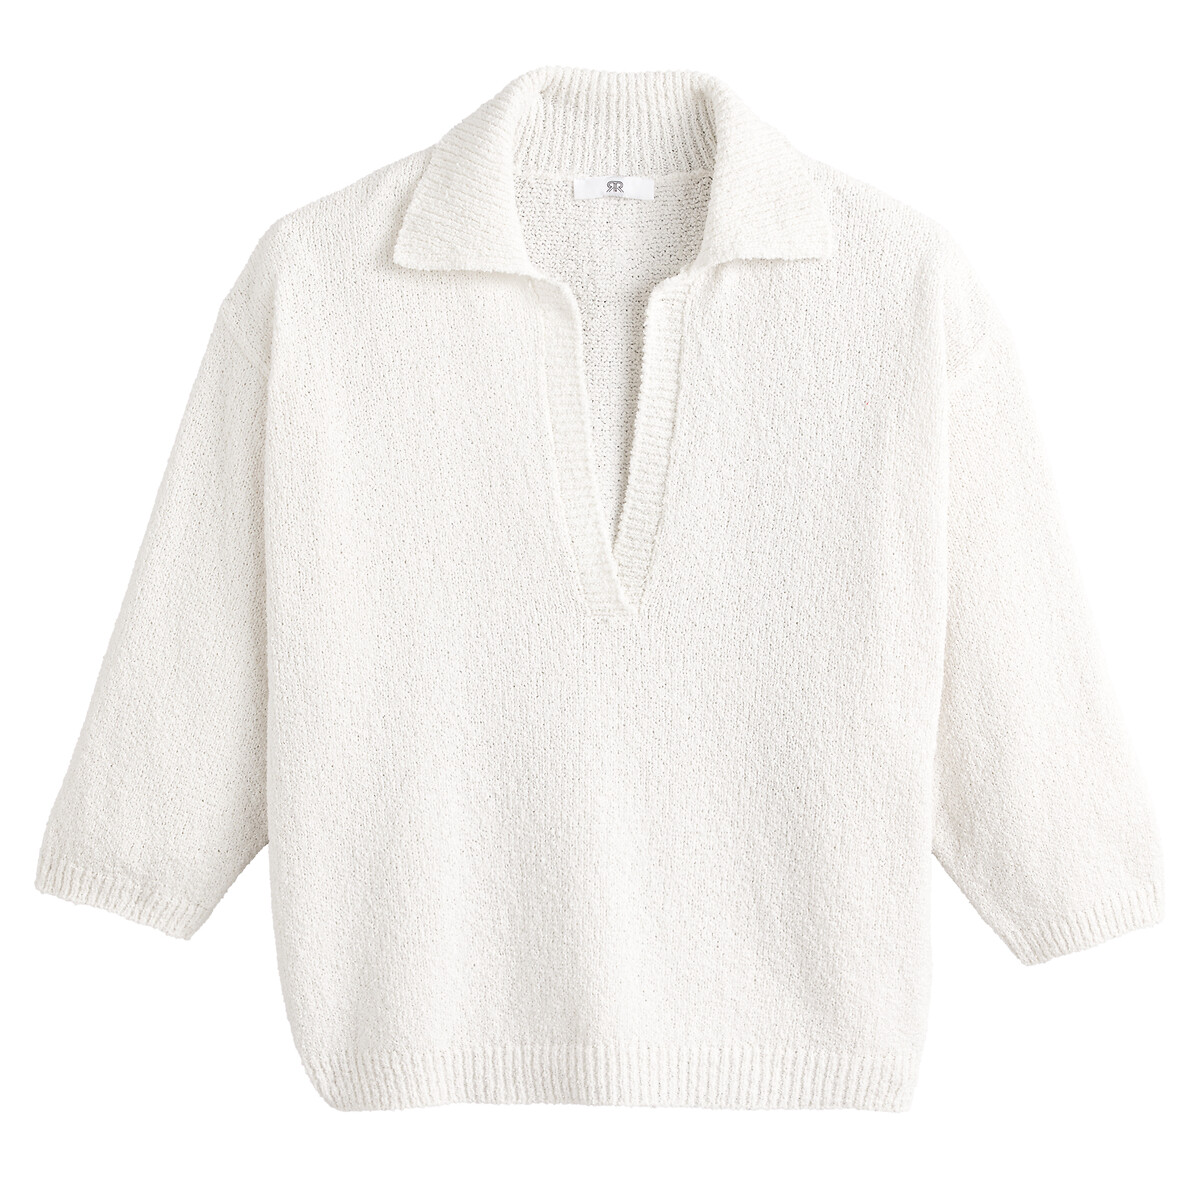 Пуловер LA REDOUTE COLLECTIONS С воротником-стойкой рукава 34 S белый, размер S - фото 5